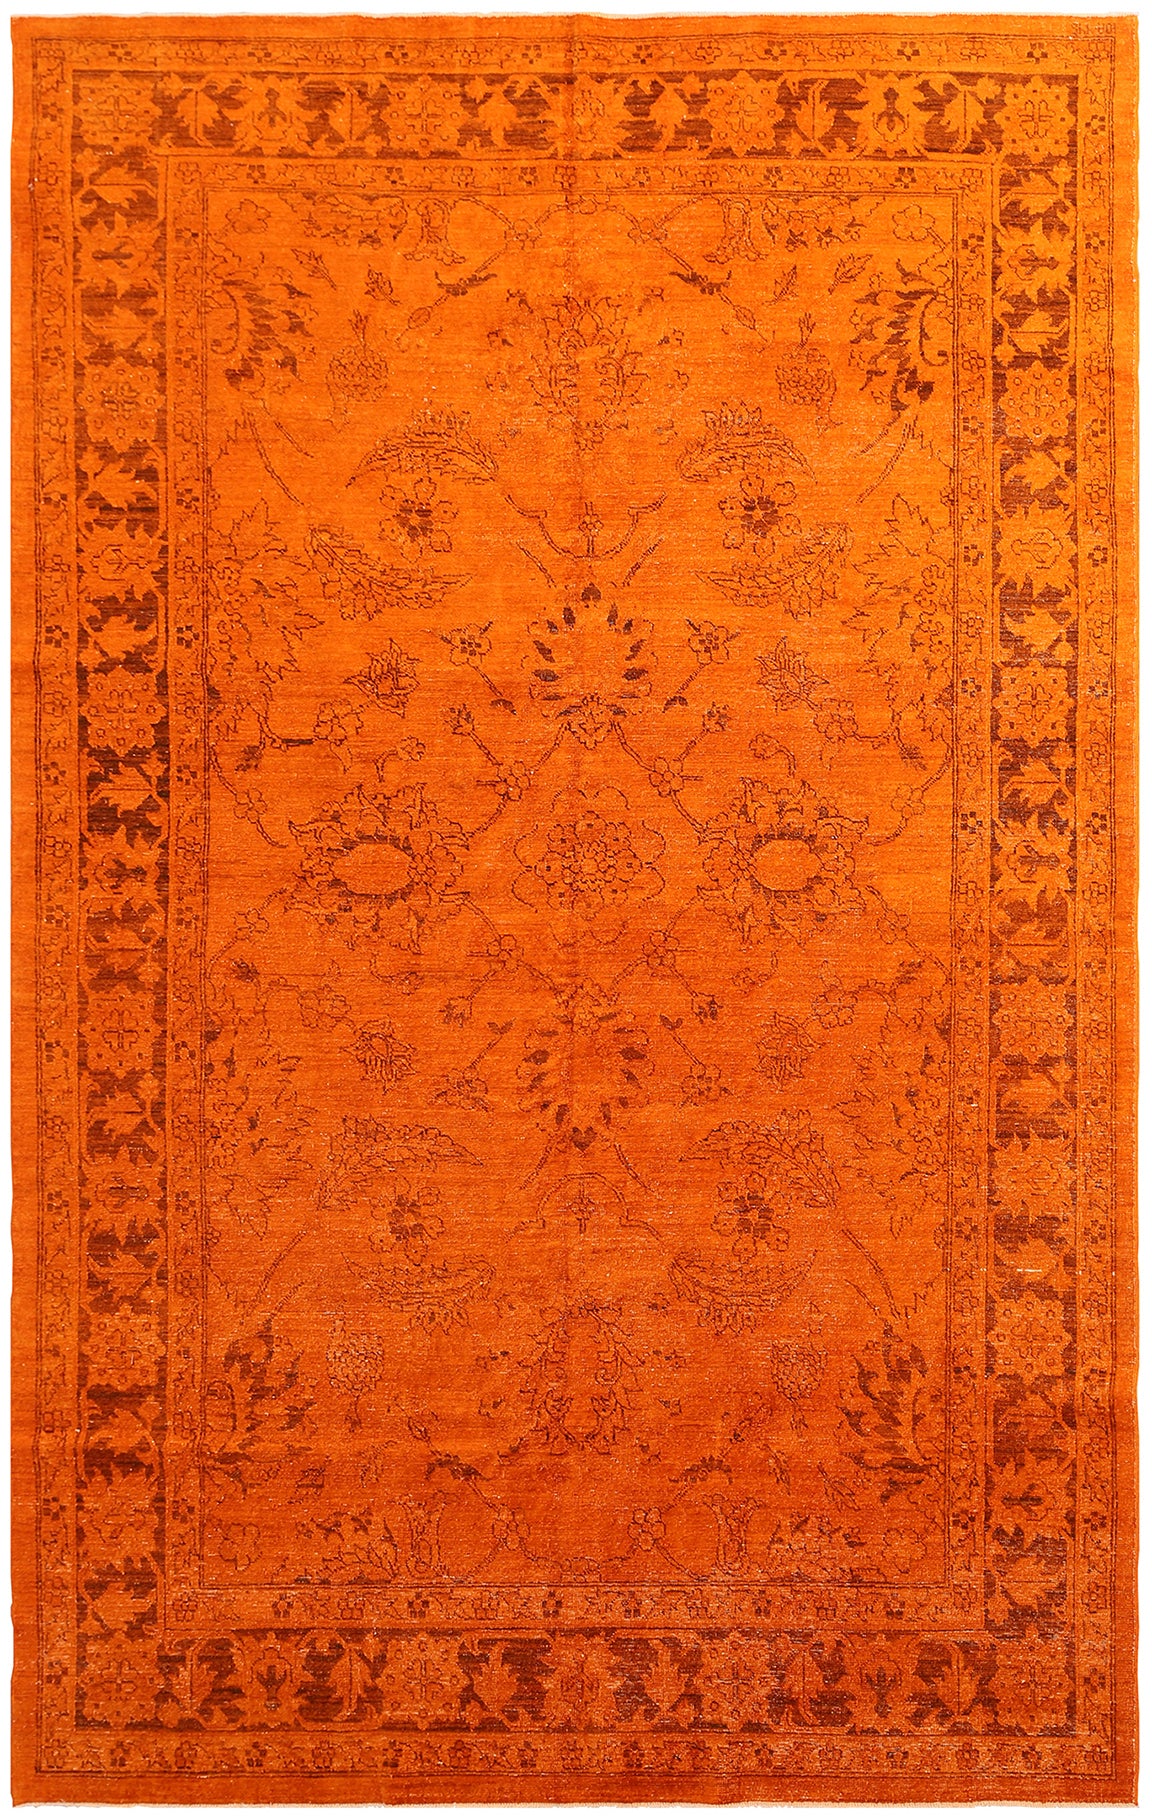 6'x9' Orange Persian Design Ariana Overdyed Rug